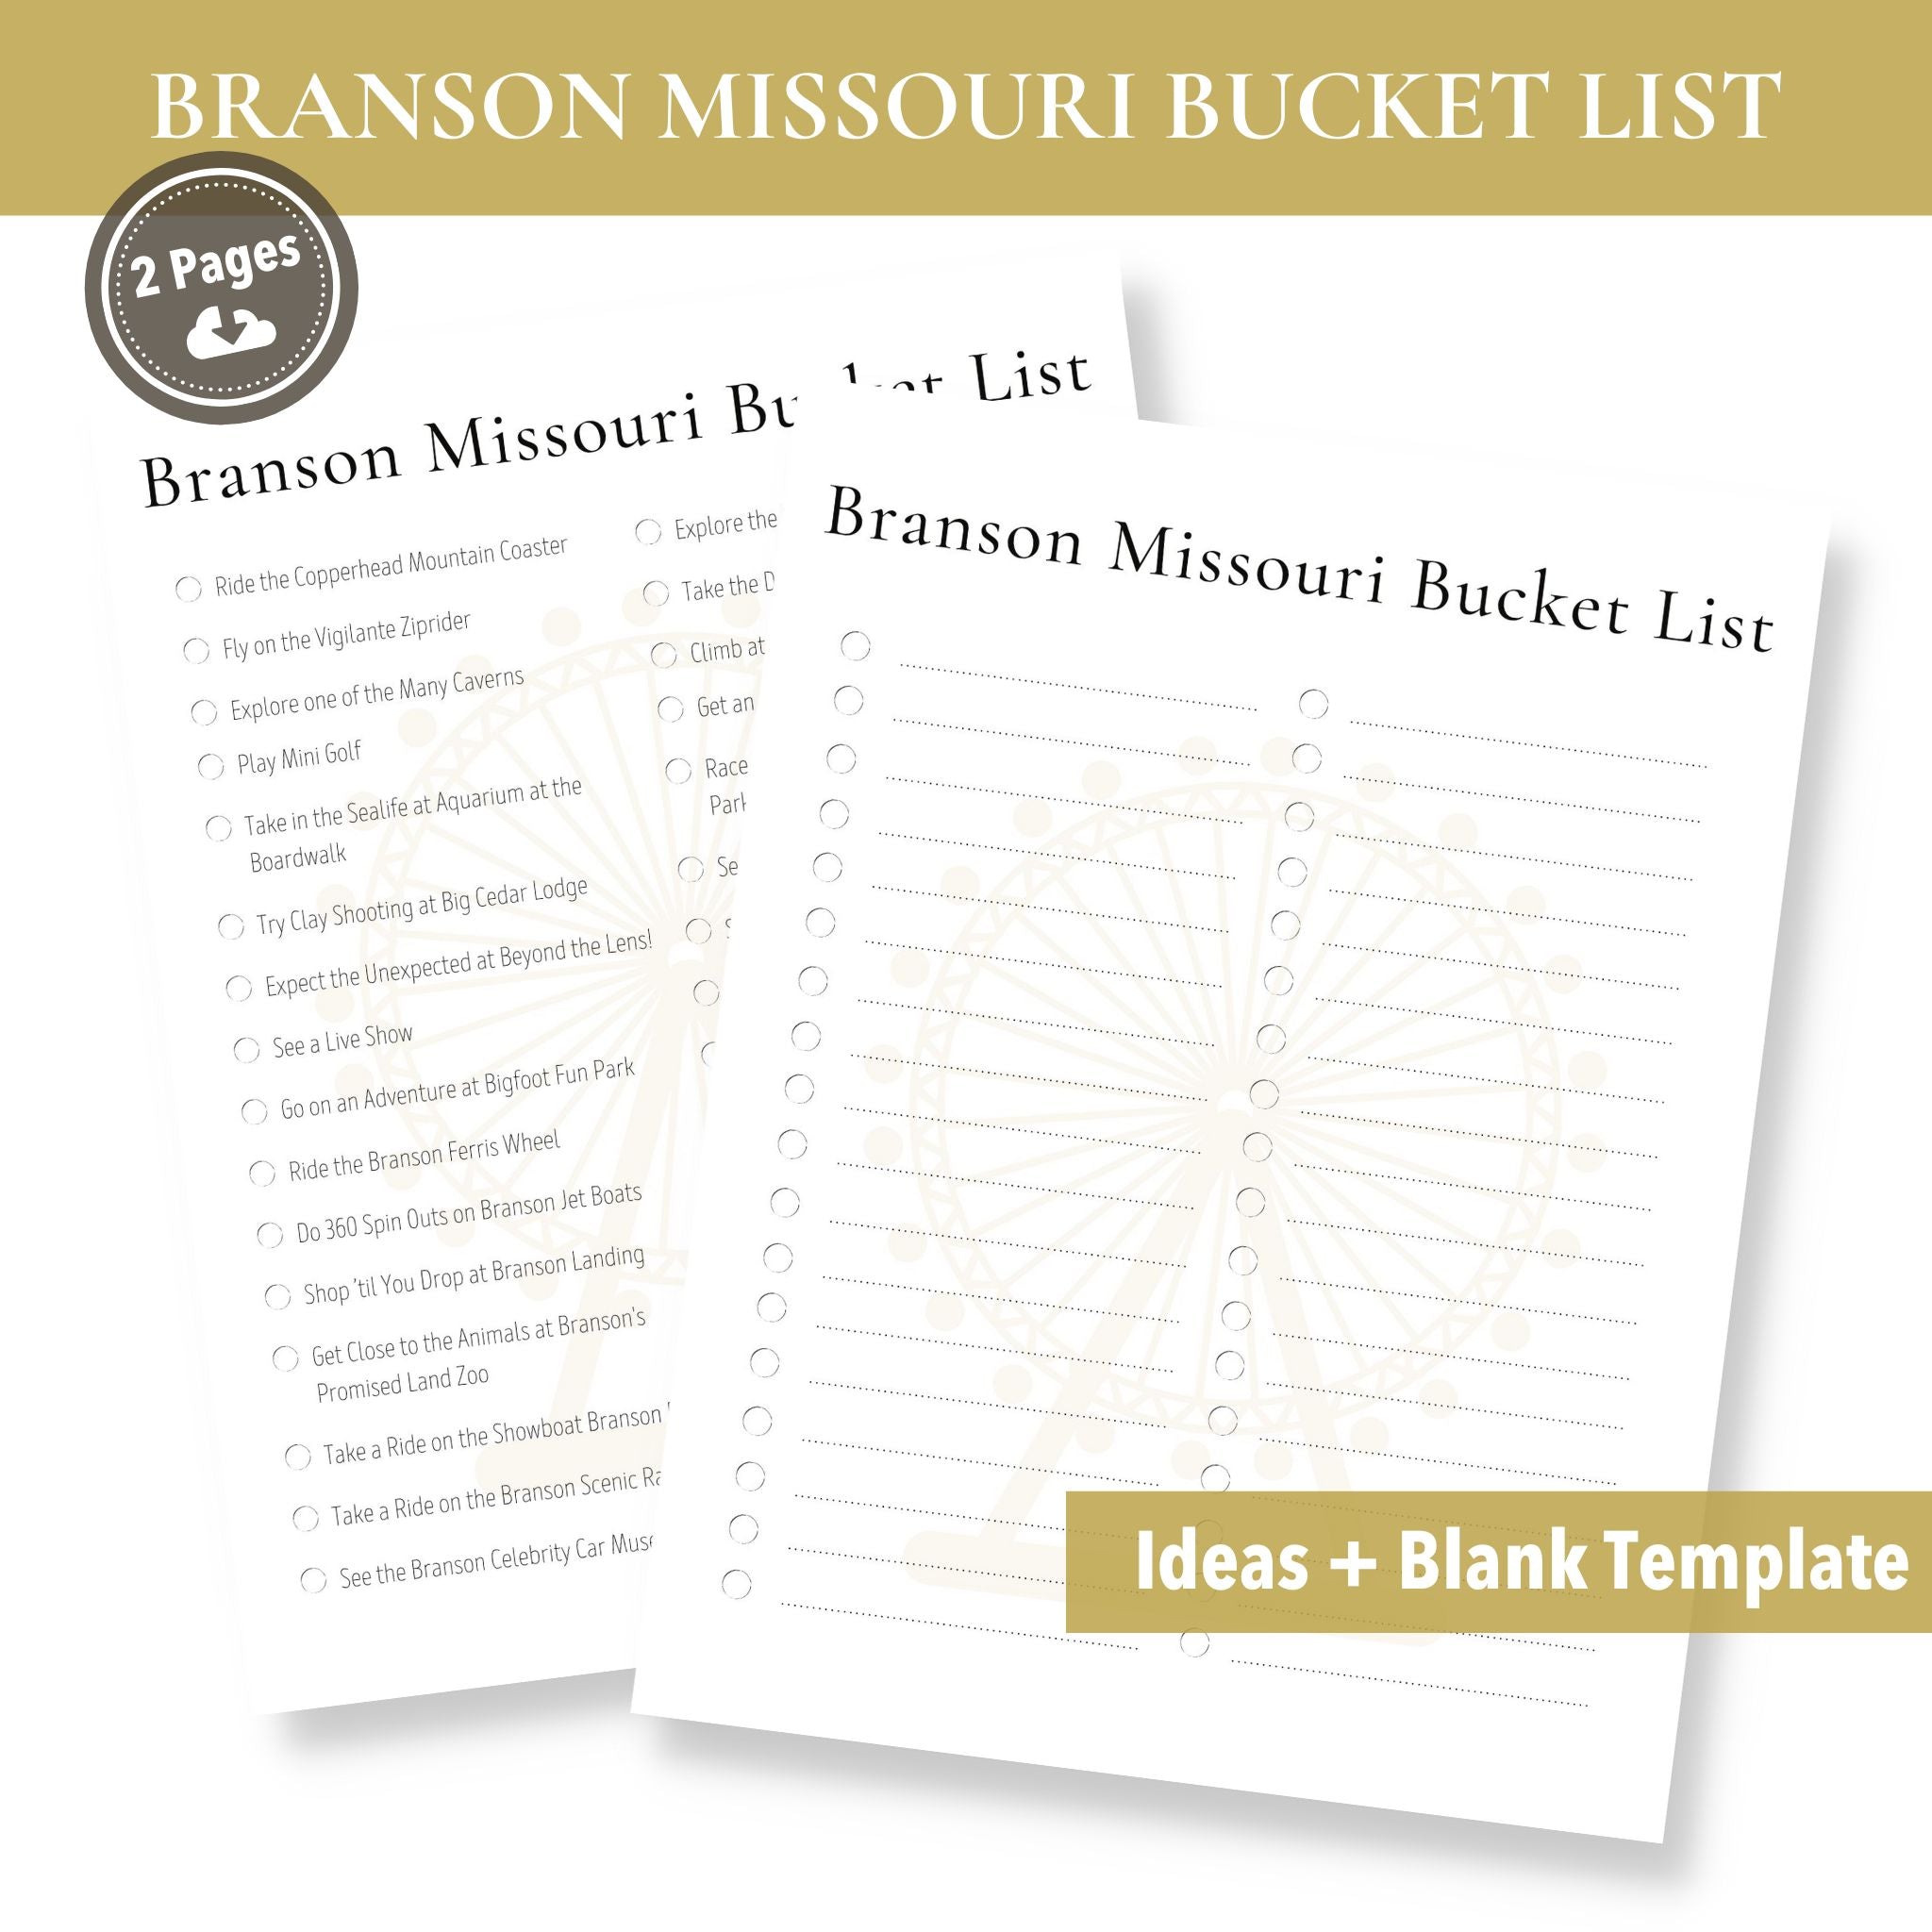 Branson Missouri Bucket List (Printable)